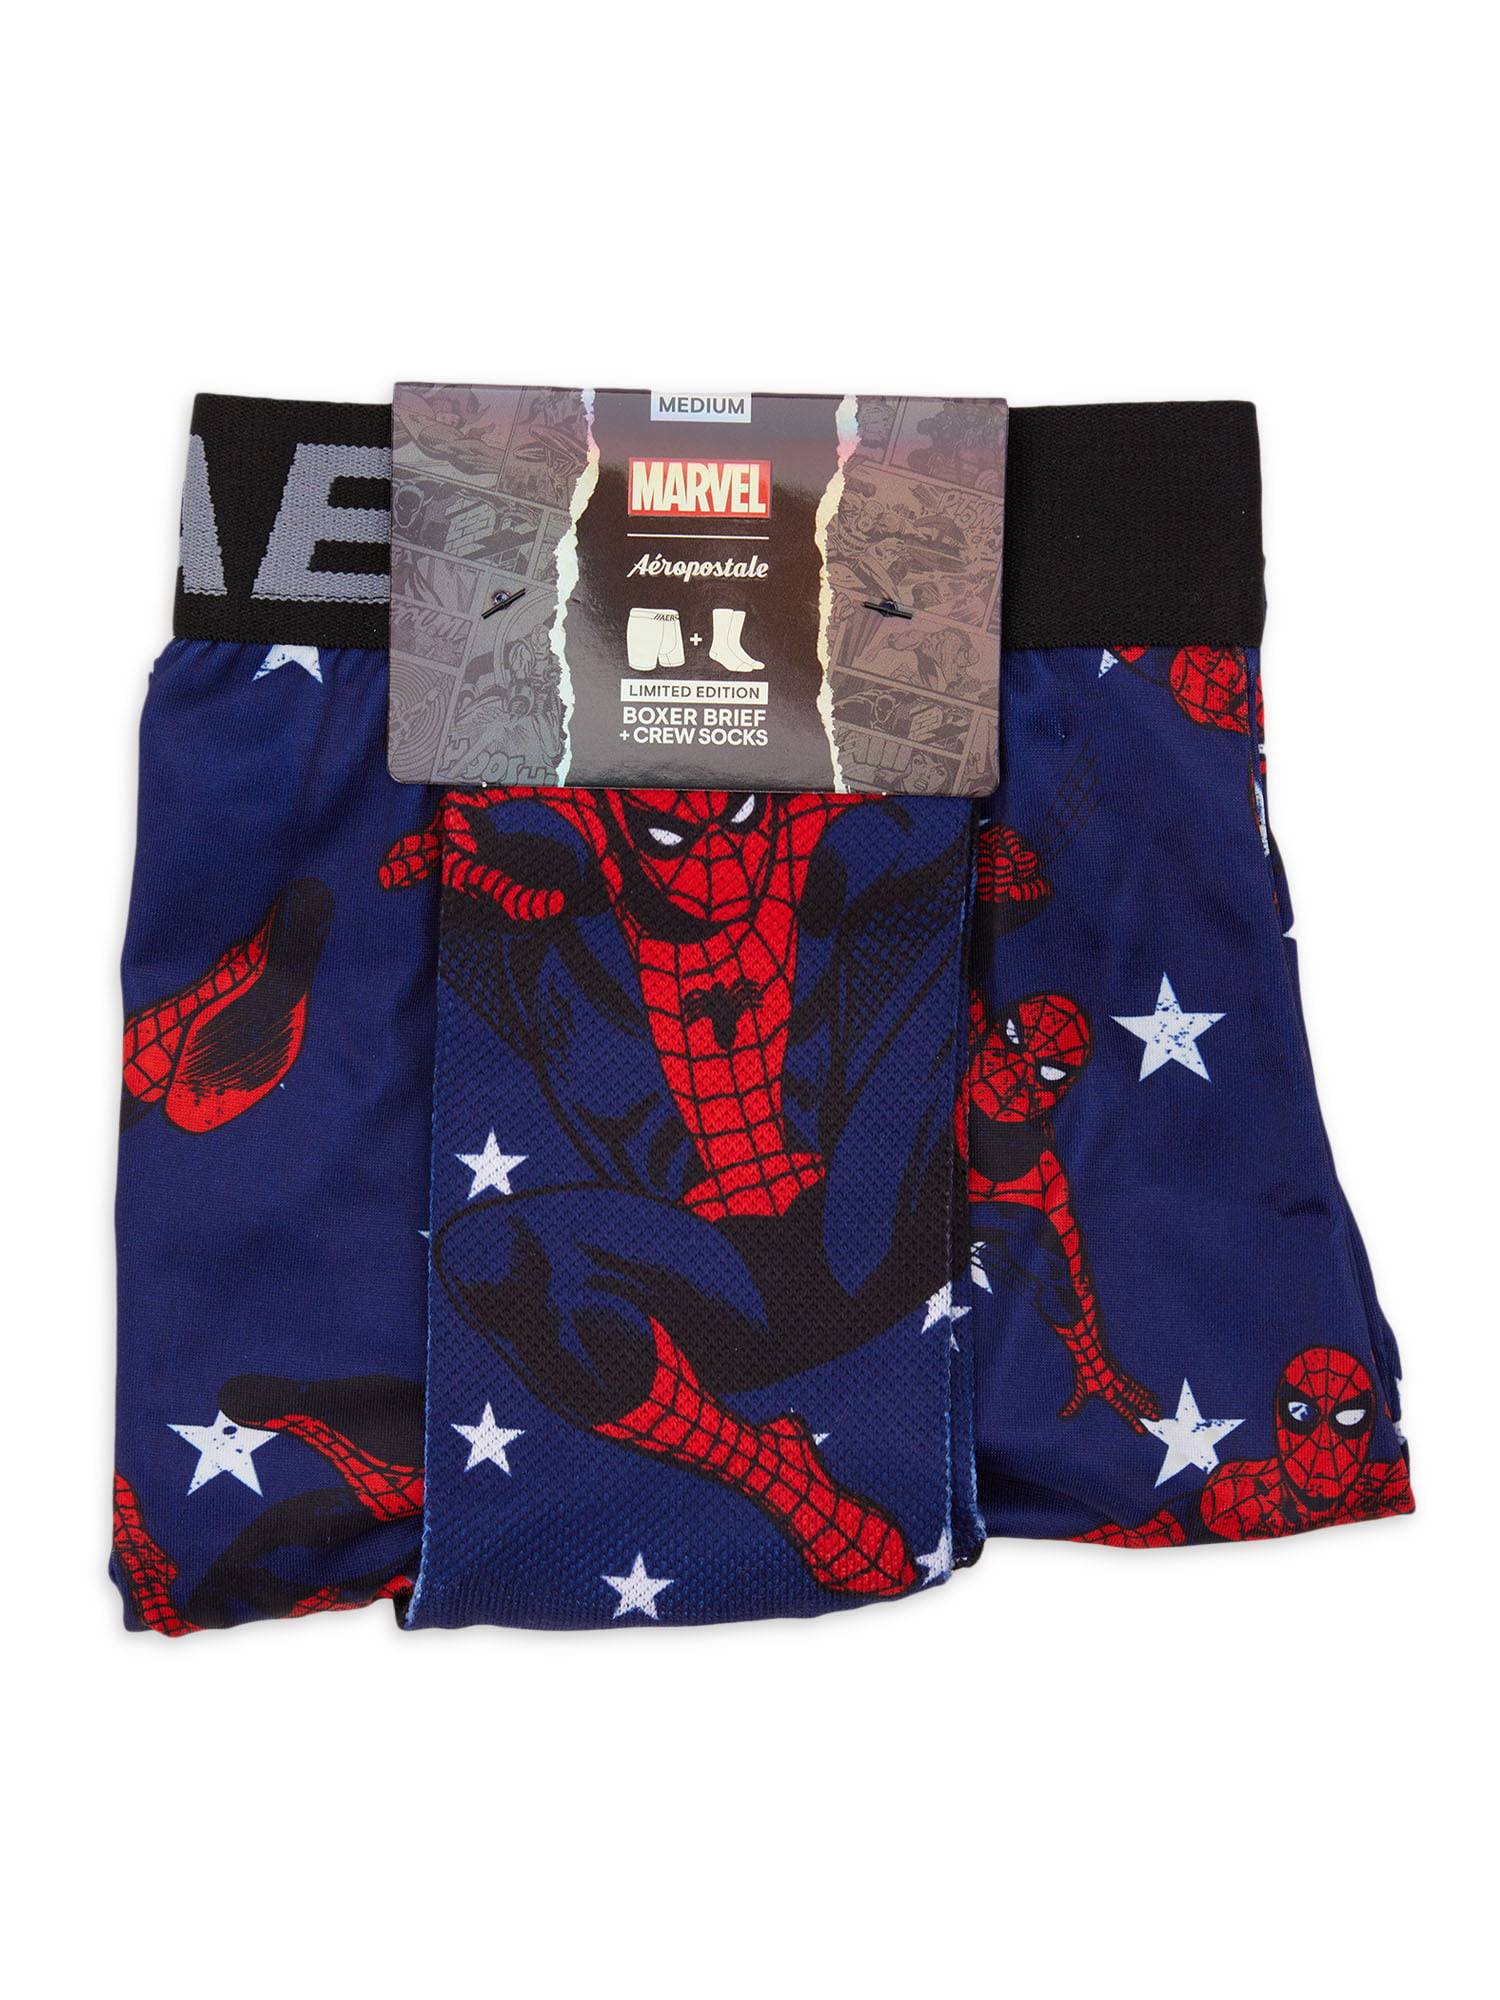 Aeropostale Men's Spider-Man Boxer Briefs and Socks Set, 2-Piece 